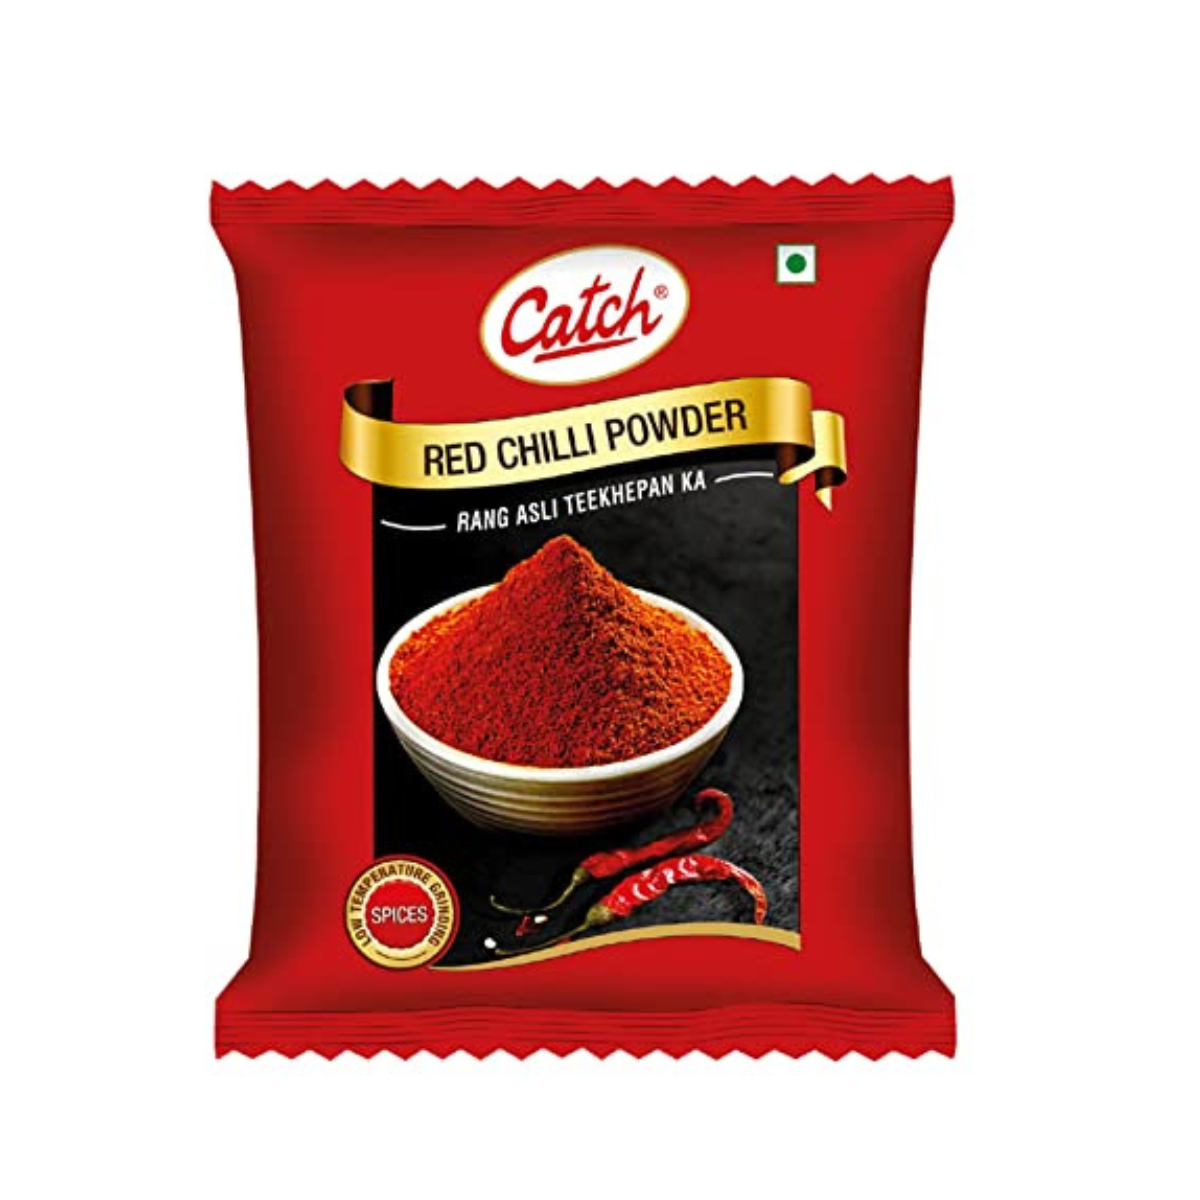 Catch Red Chilli Powder - 100g